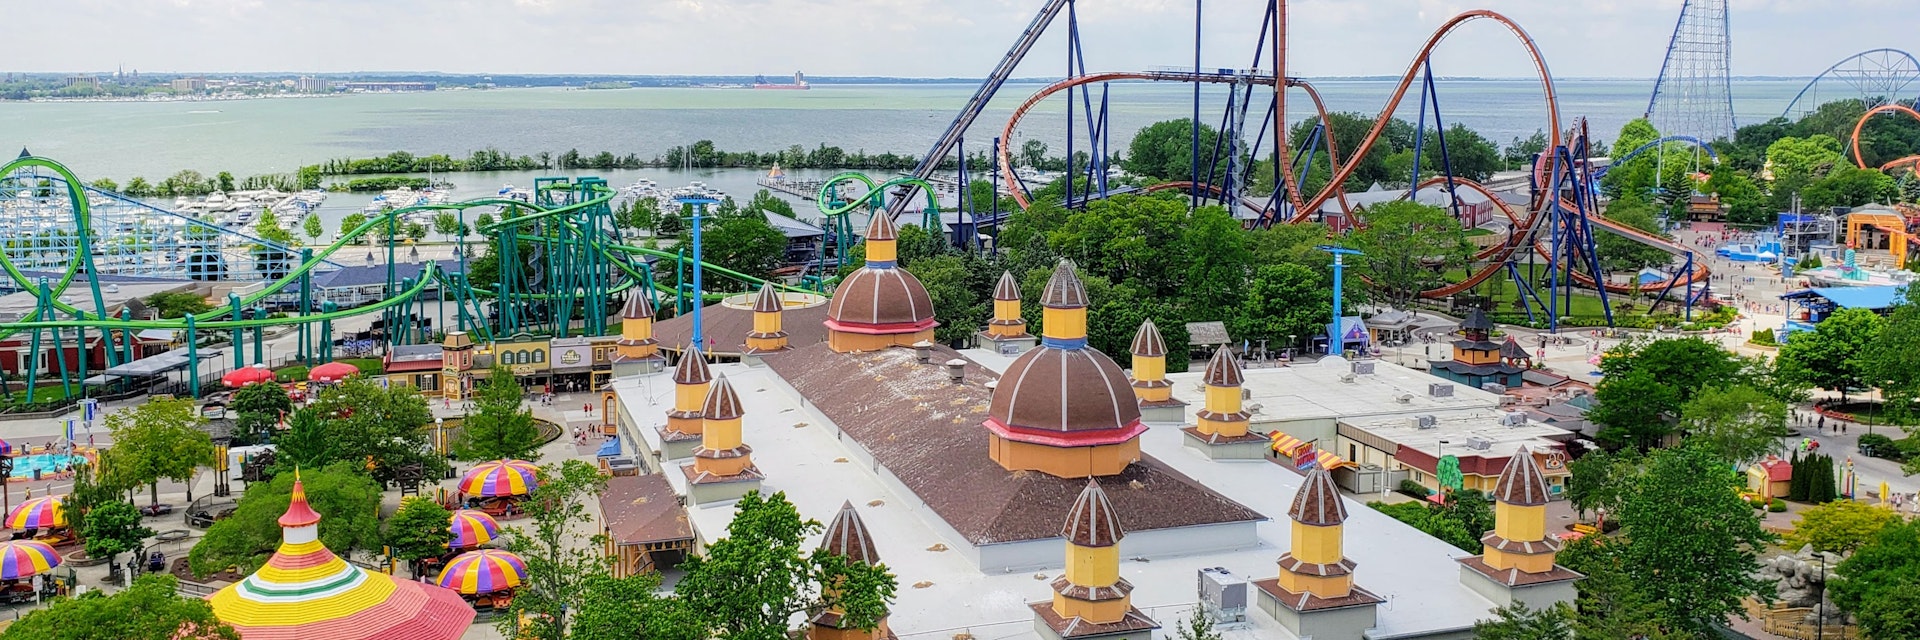 Cedar Point Amusement Park in Sandusky, Ohio.